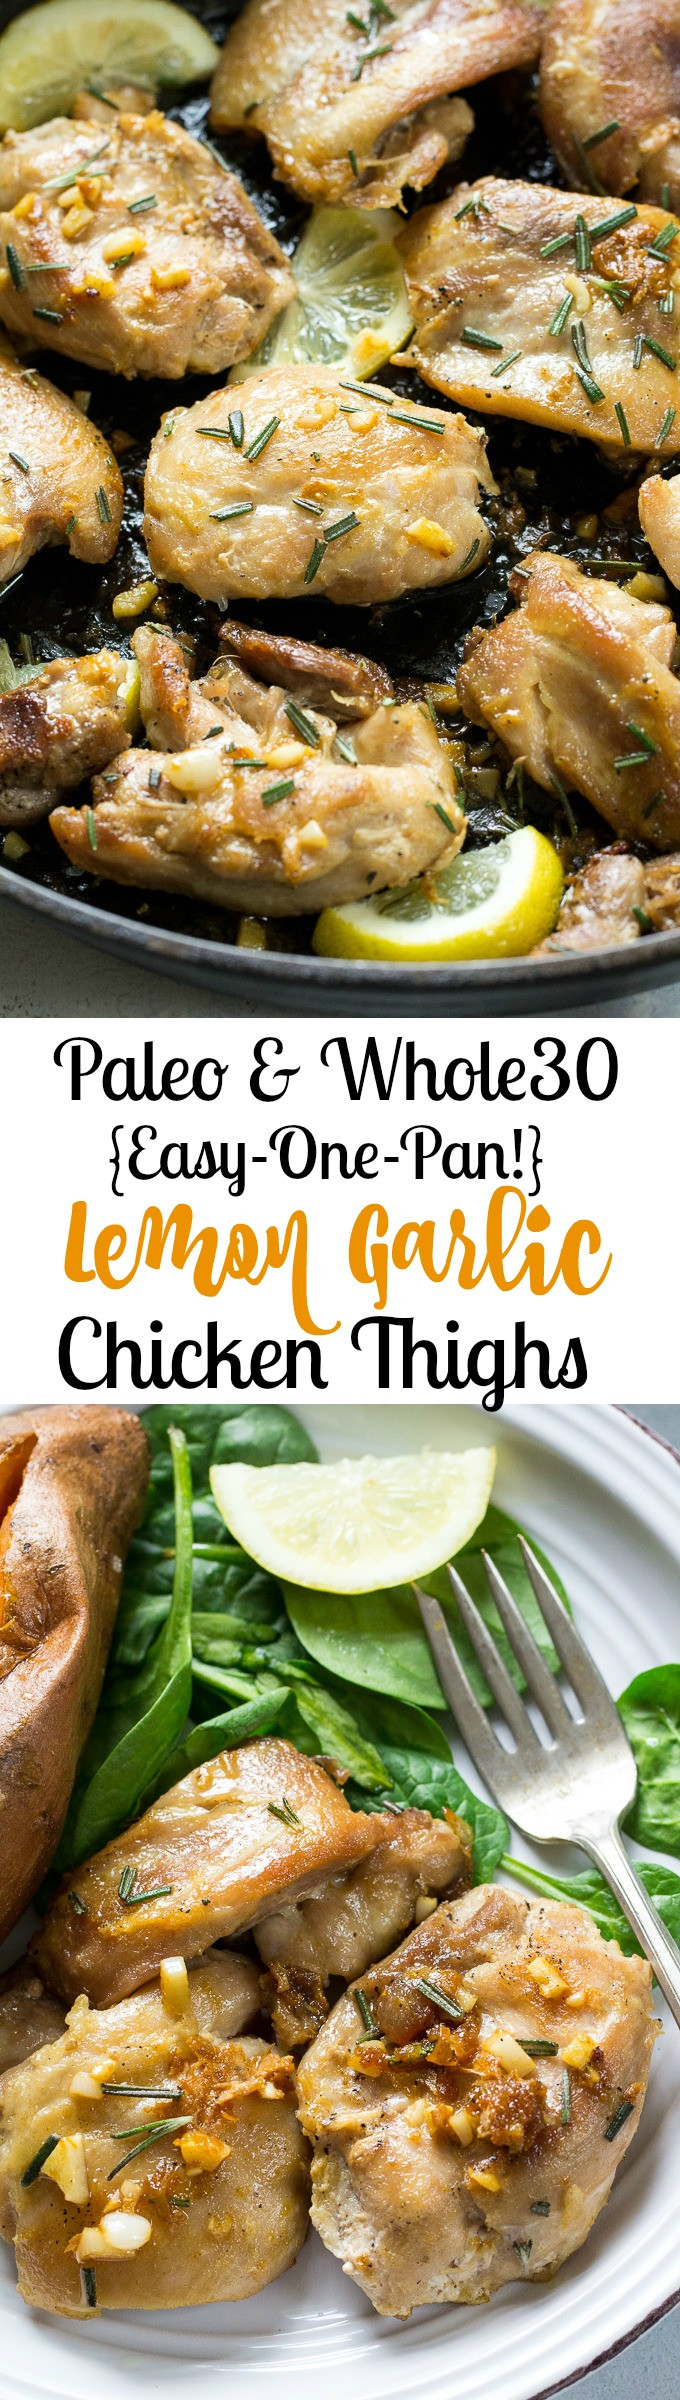 Paleo Chicken Thighs Recipes
 Easy Lemon Garlic Chicken Thighs Paleo & Whole30